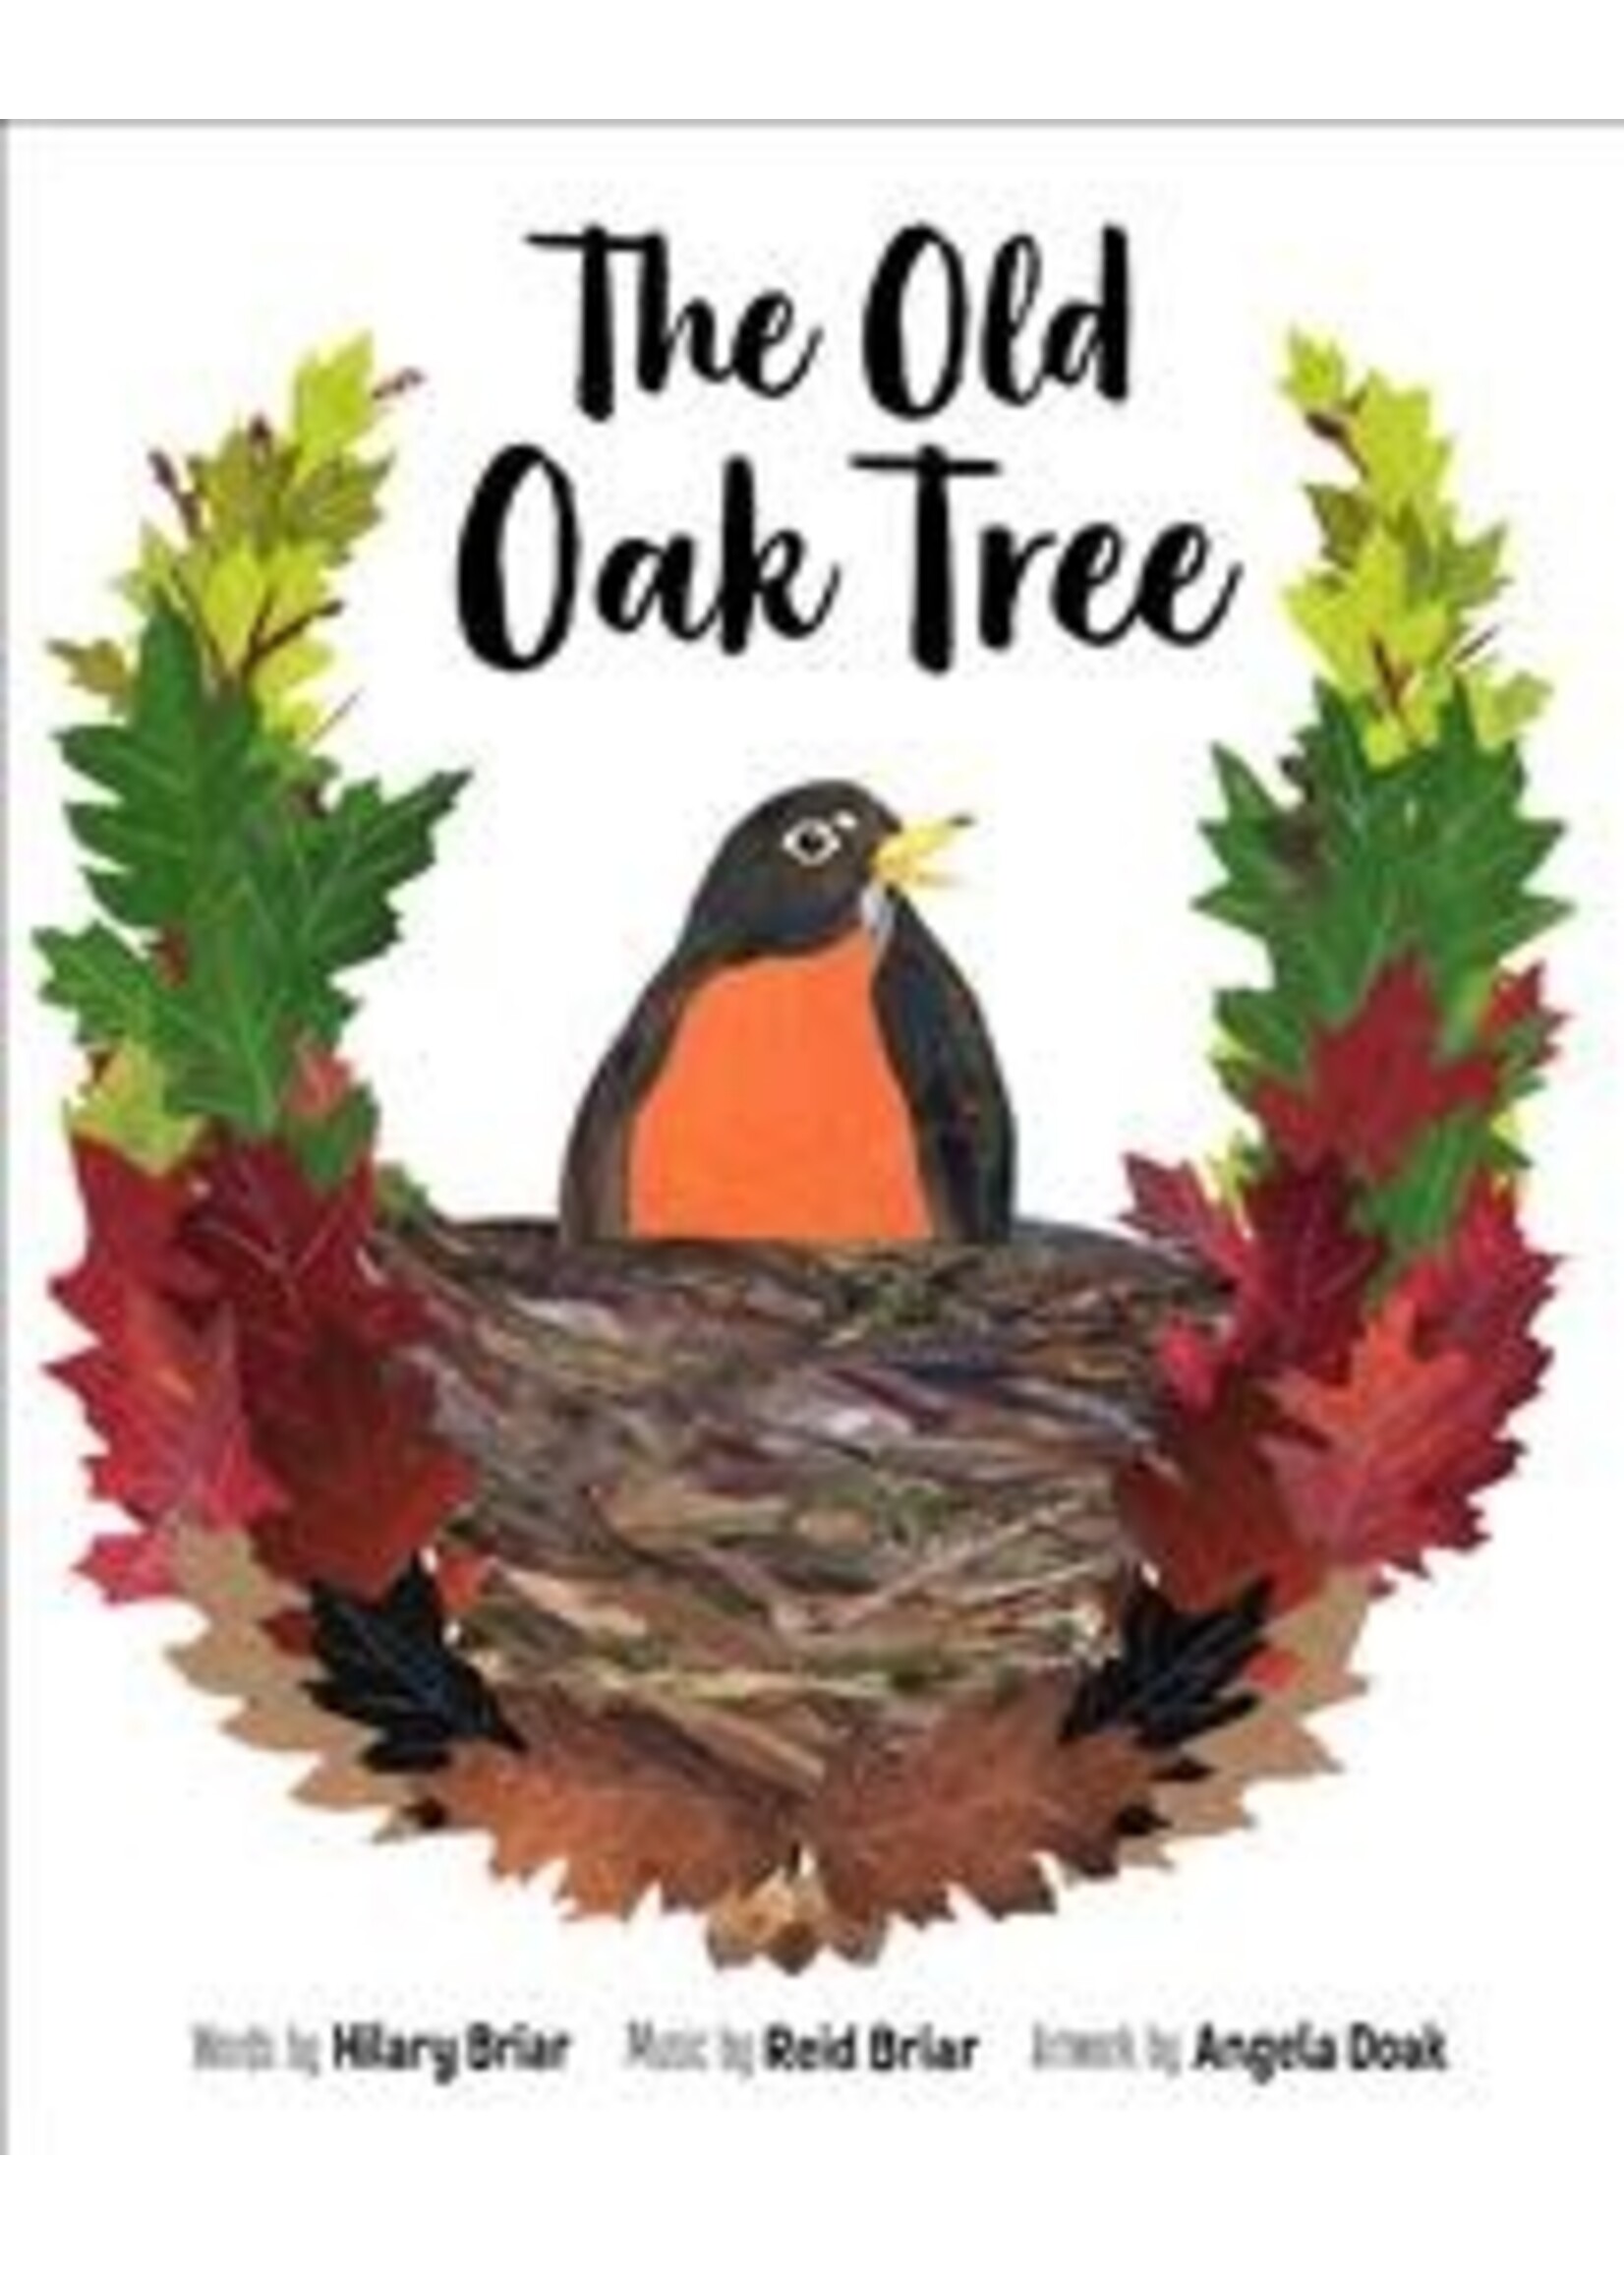 The Old Oak Tree by Hilary Briar, Reid Briar, Angela Doak